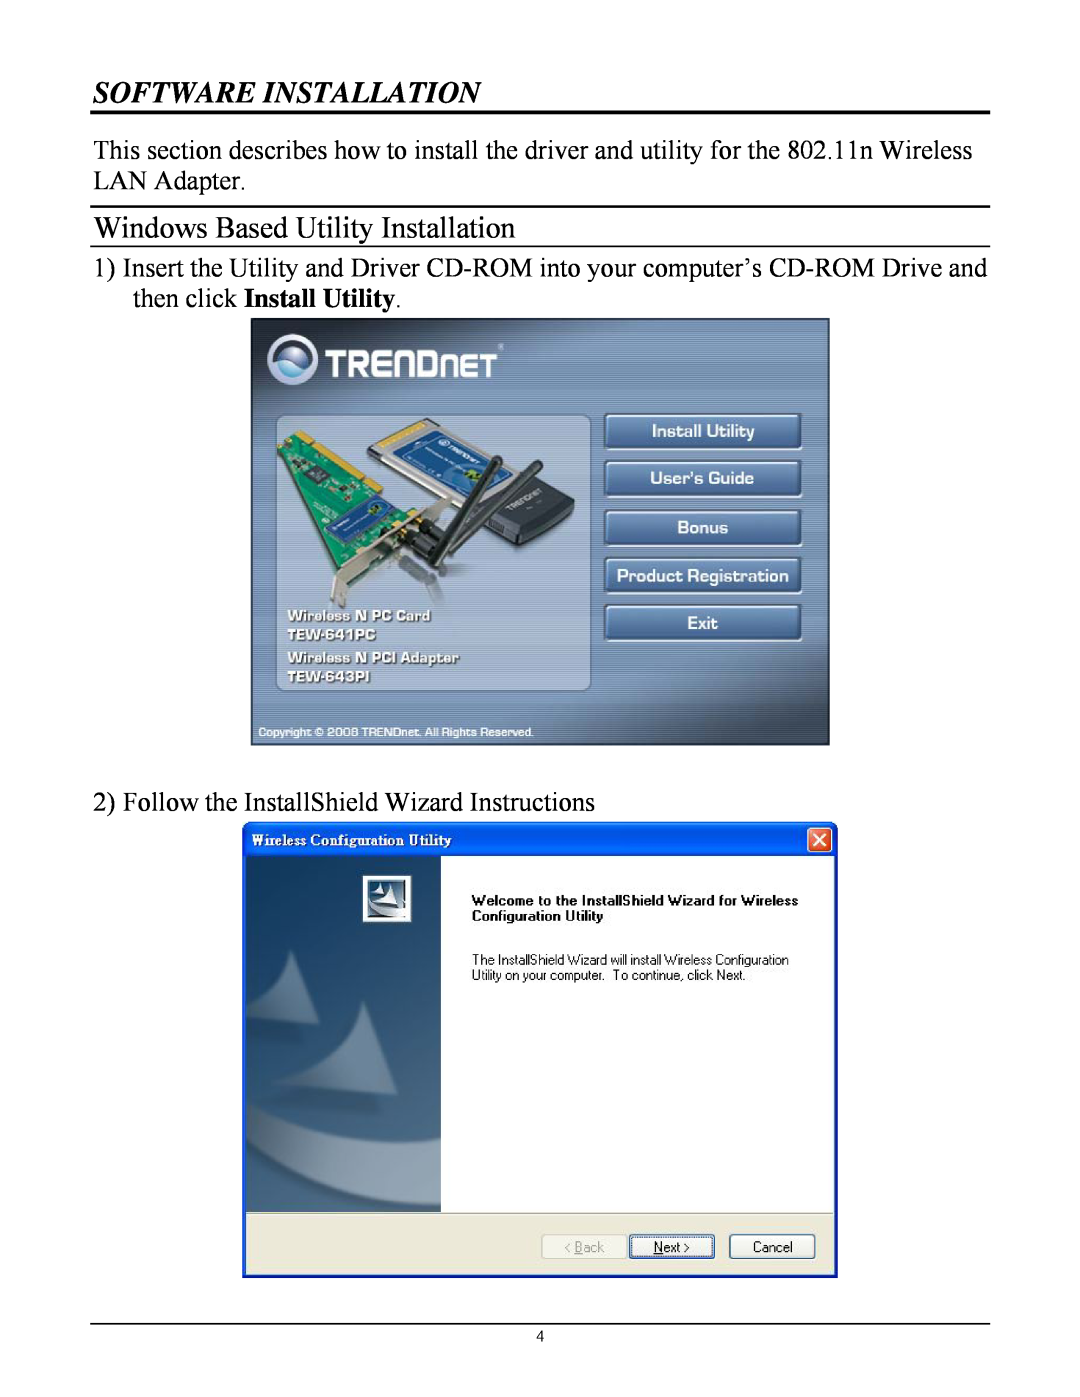 TRENDnet TEW-641PC manual Software Installation, Windows Based Utility Installation 